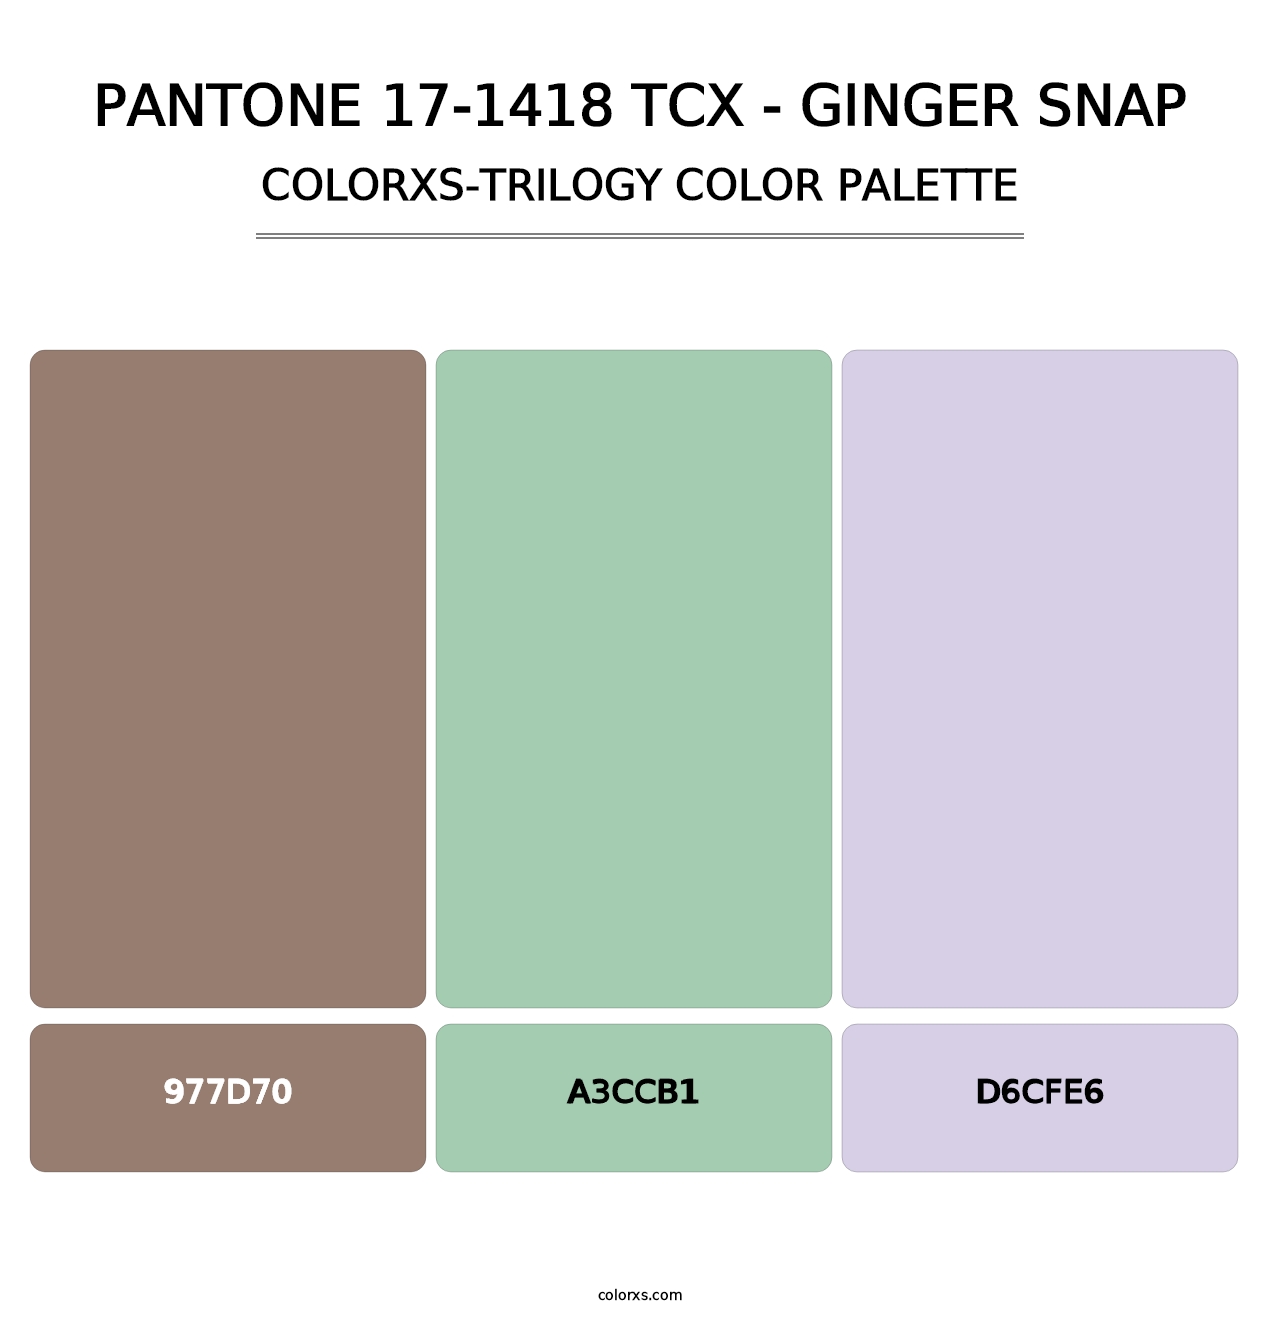 PANTONE 17-1418 TCX - Ginger Snap - Colorxs Trilogy Palette